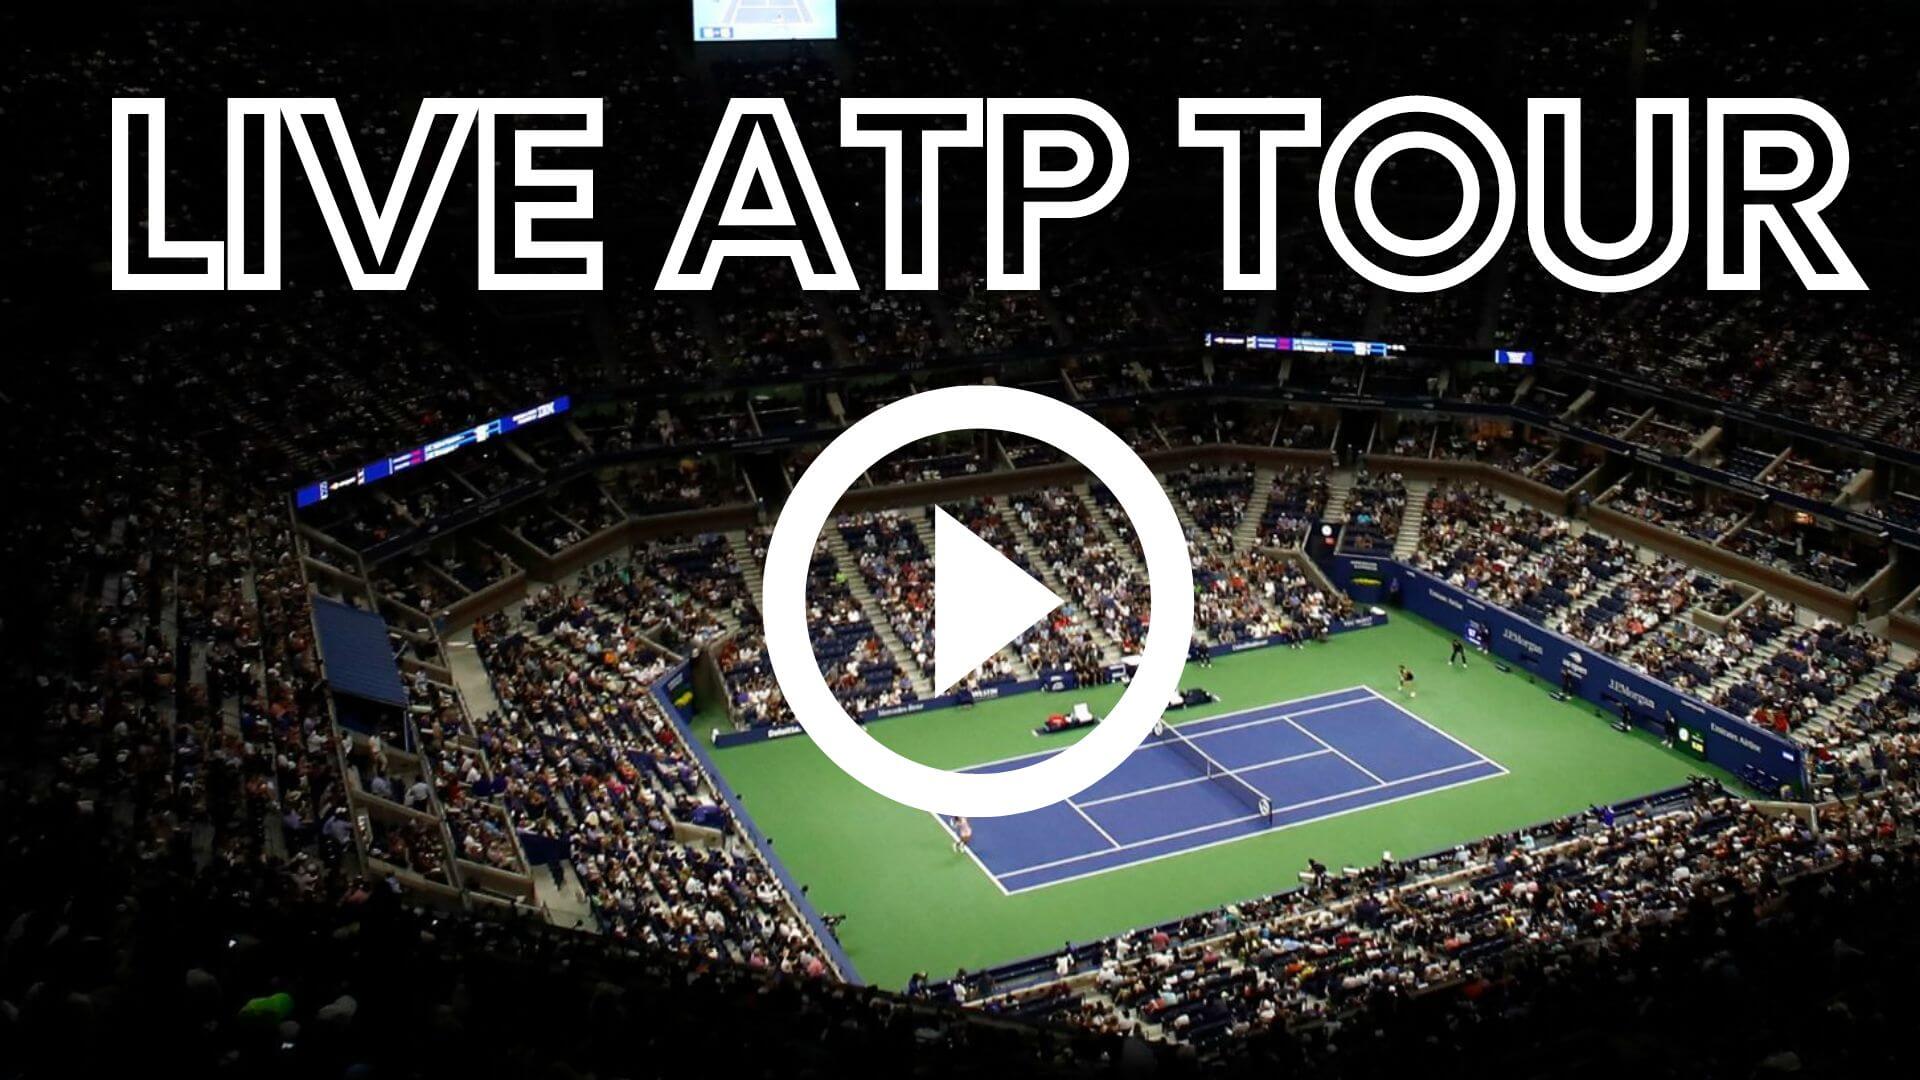 ATP Tennis Videos